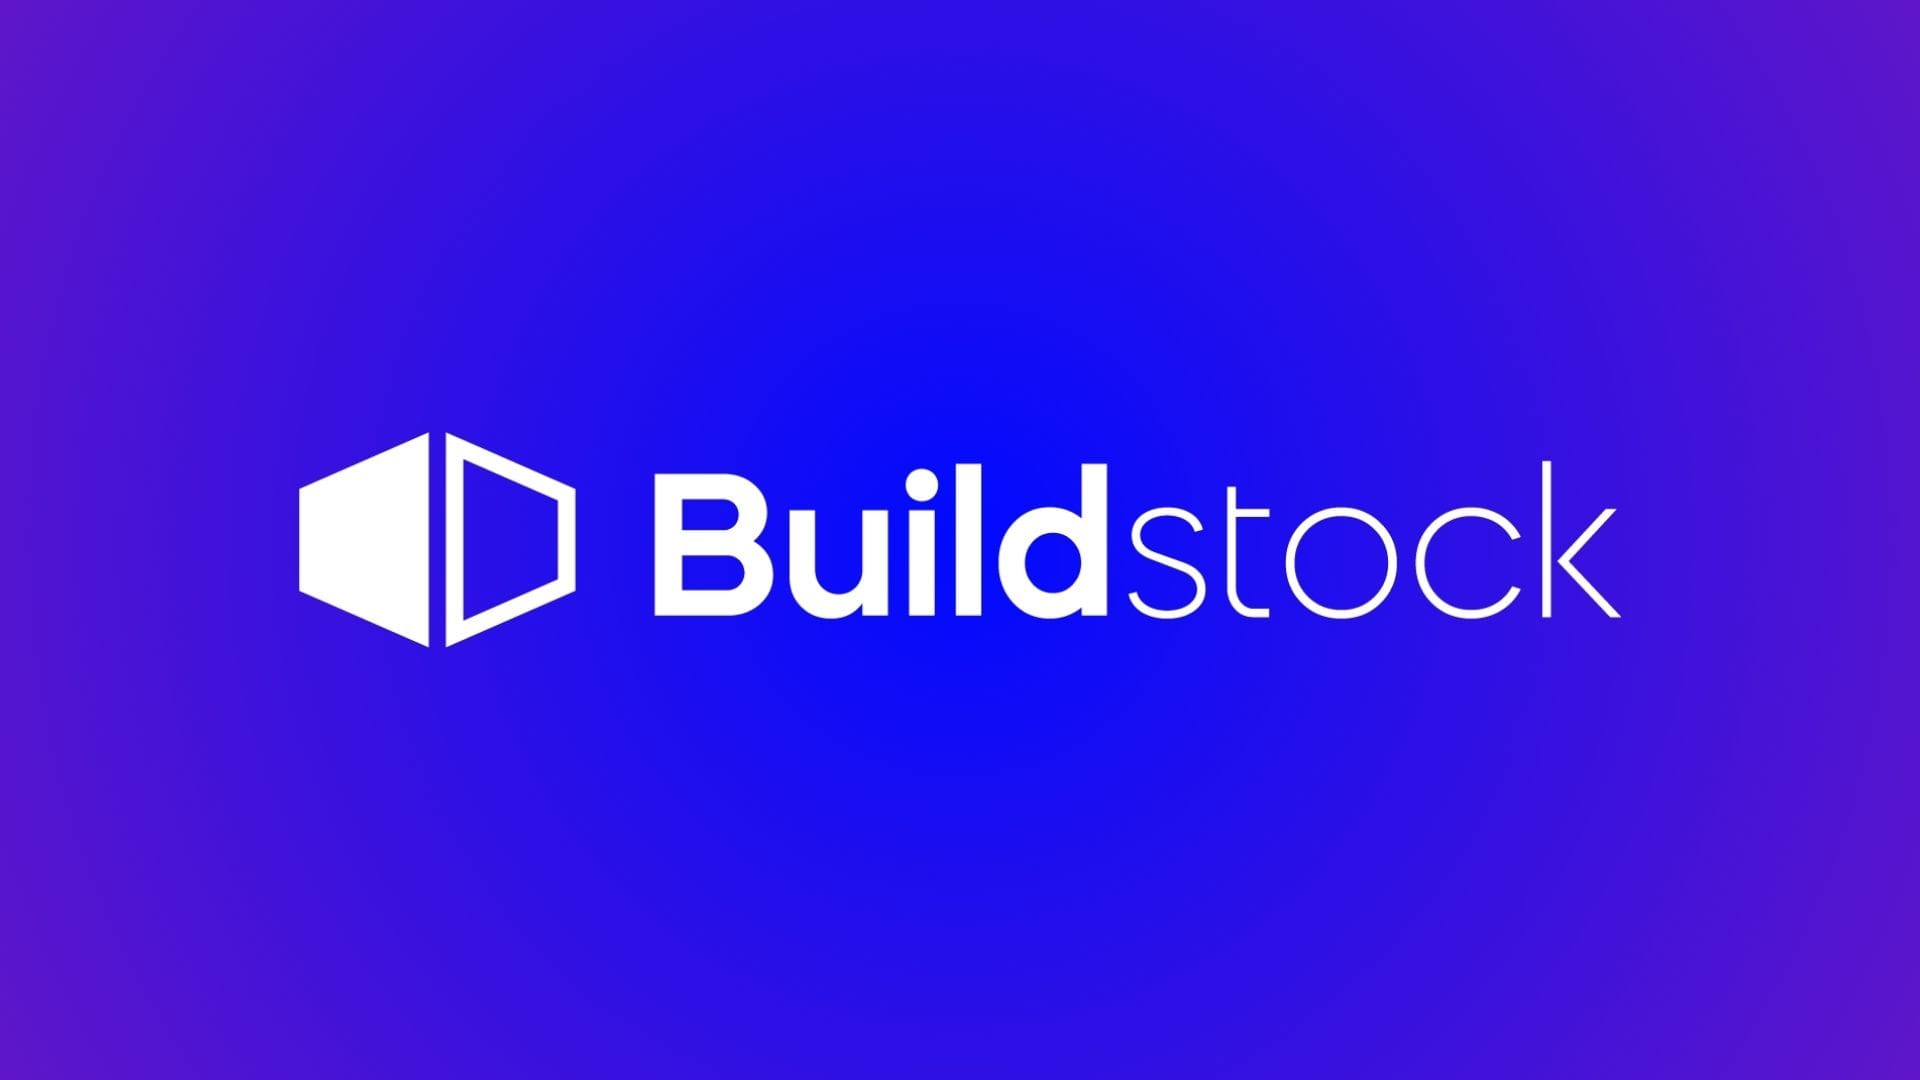 Buildstock Raises $1.6M Funding For AI-Driven Construction Marketplace